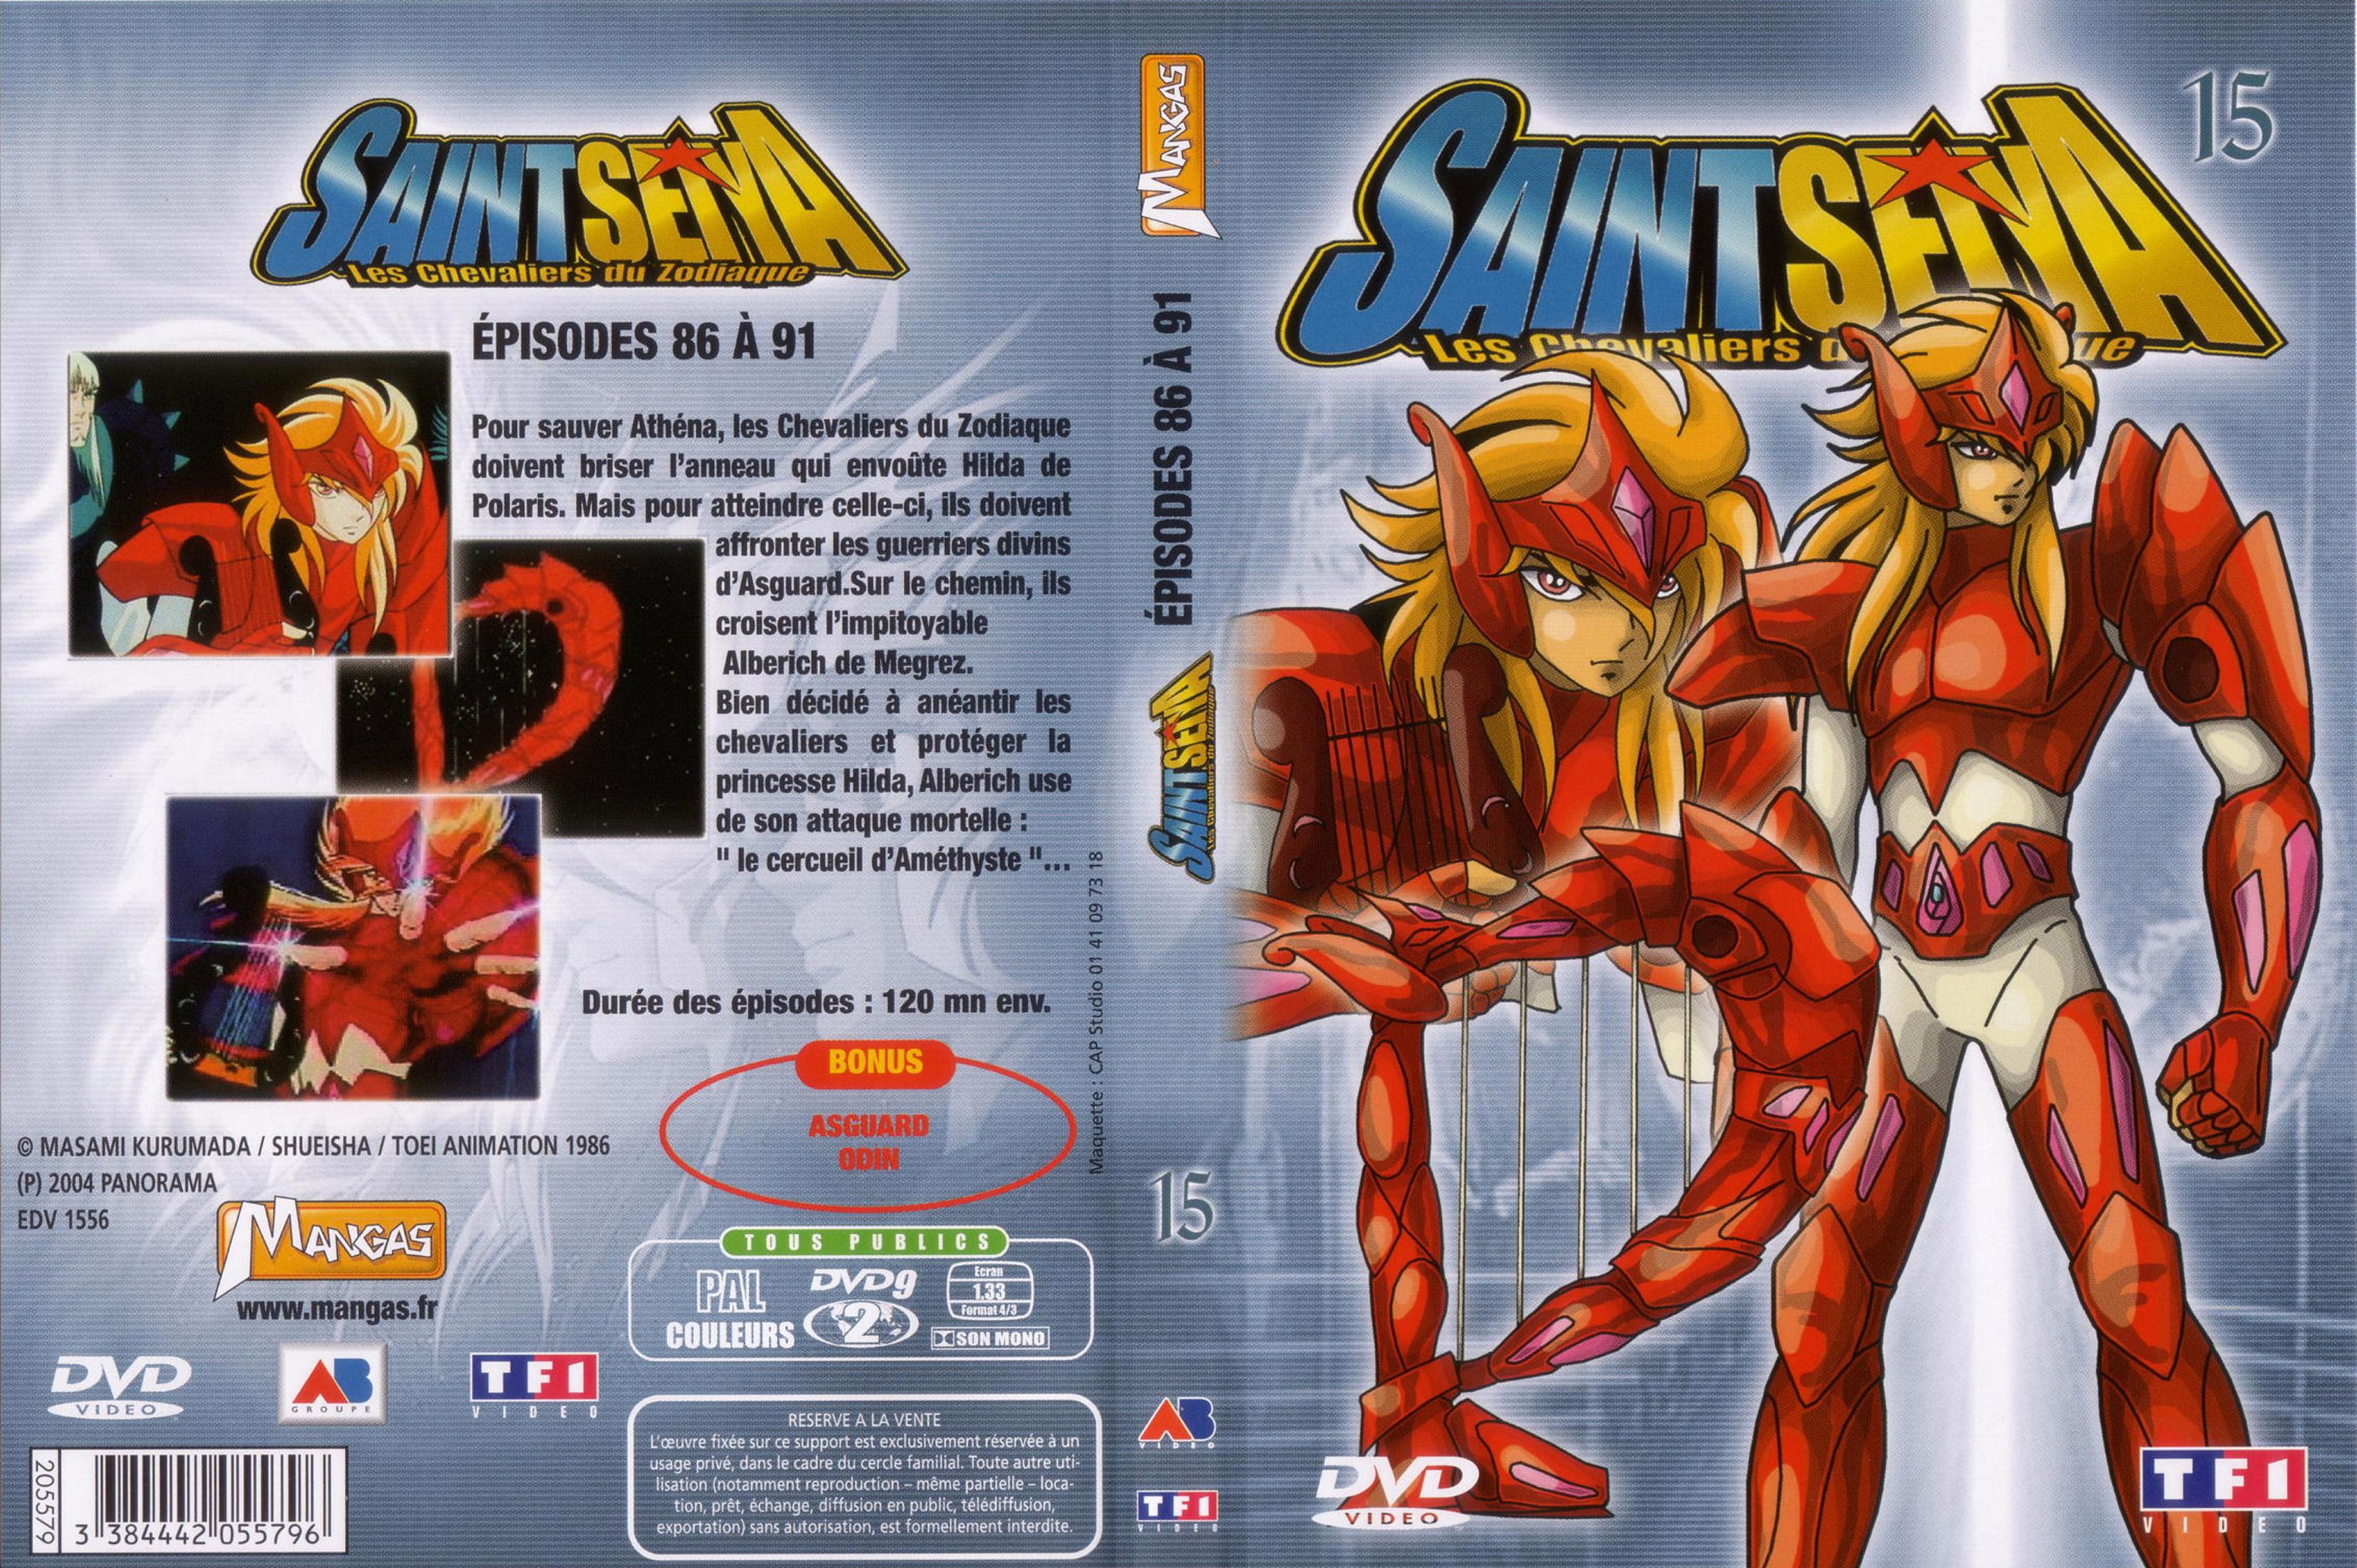 Jaquette DVD Saint Seiya vol 15